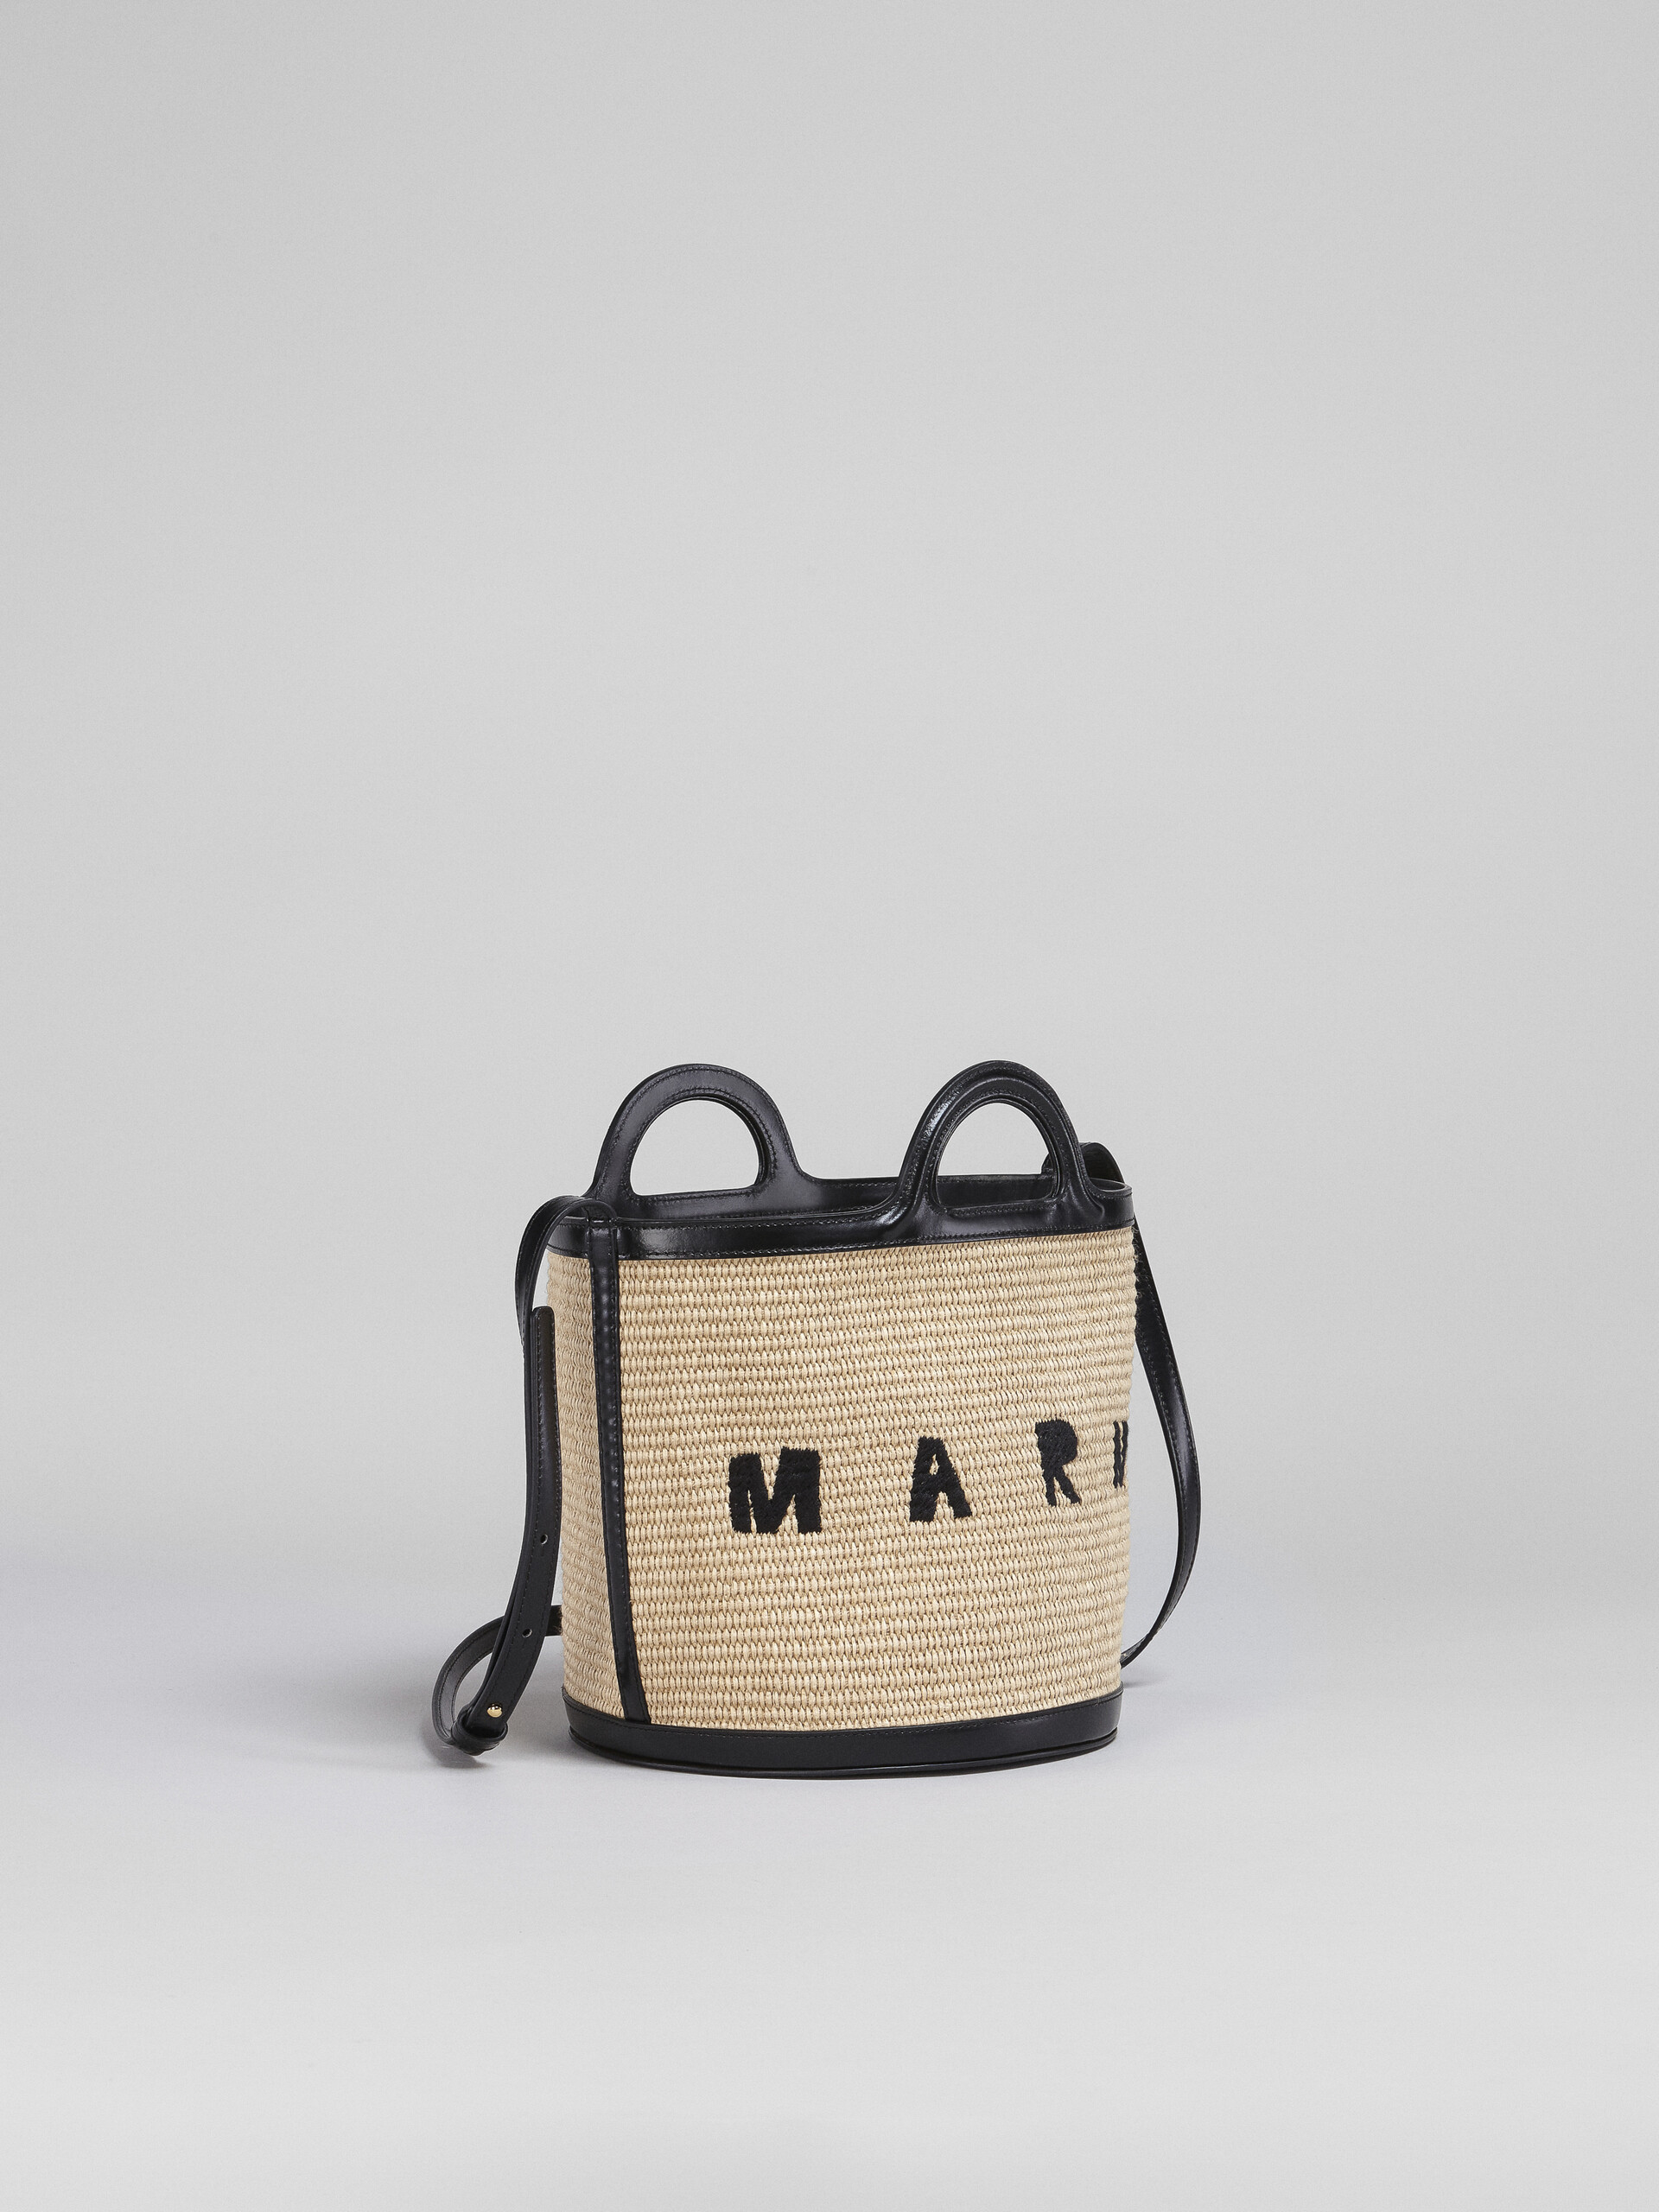 TROPICALIA small bucket bag  in black leather and raffia - Shoulder Bag - Image 6